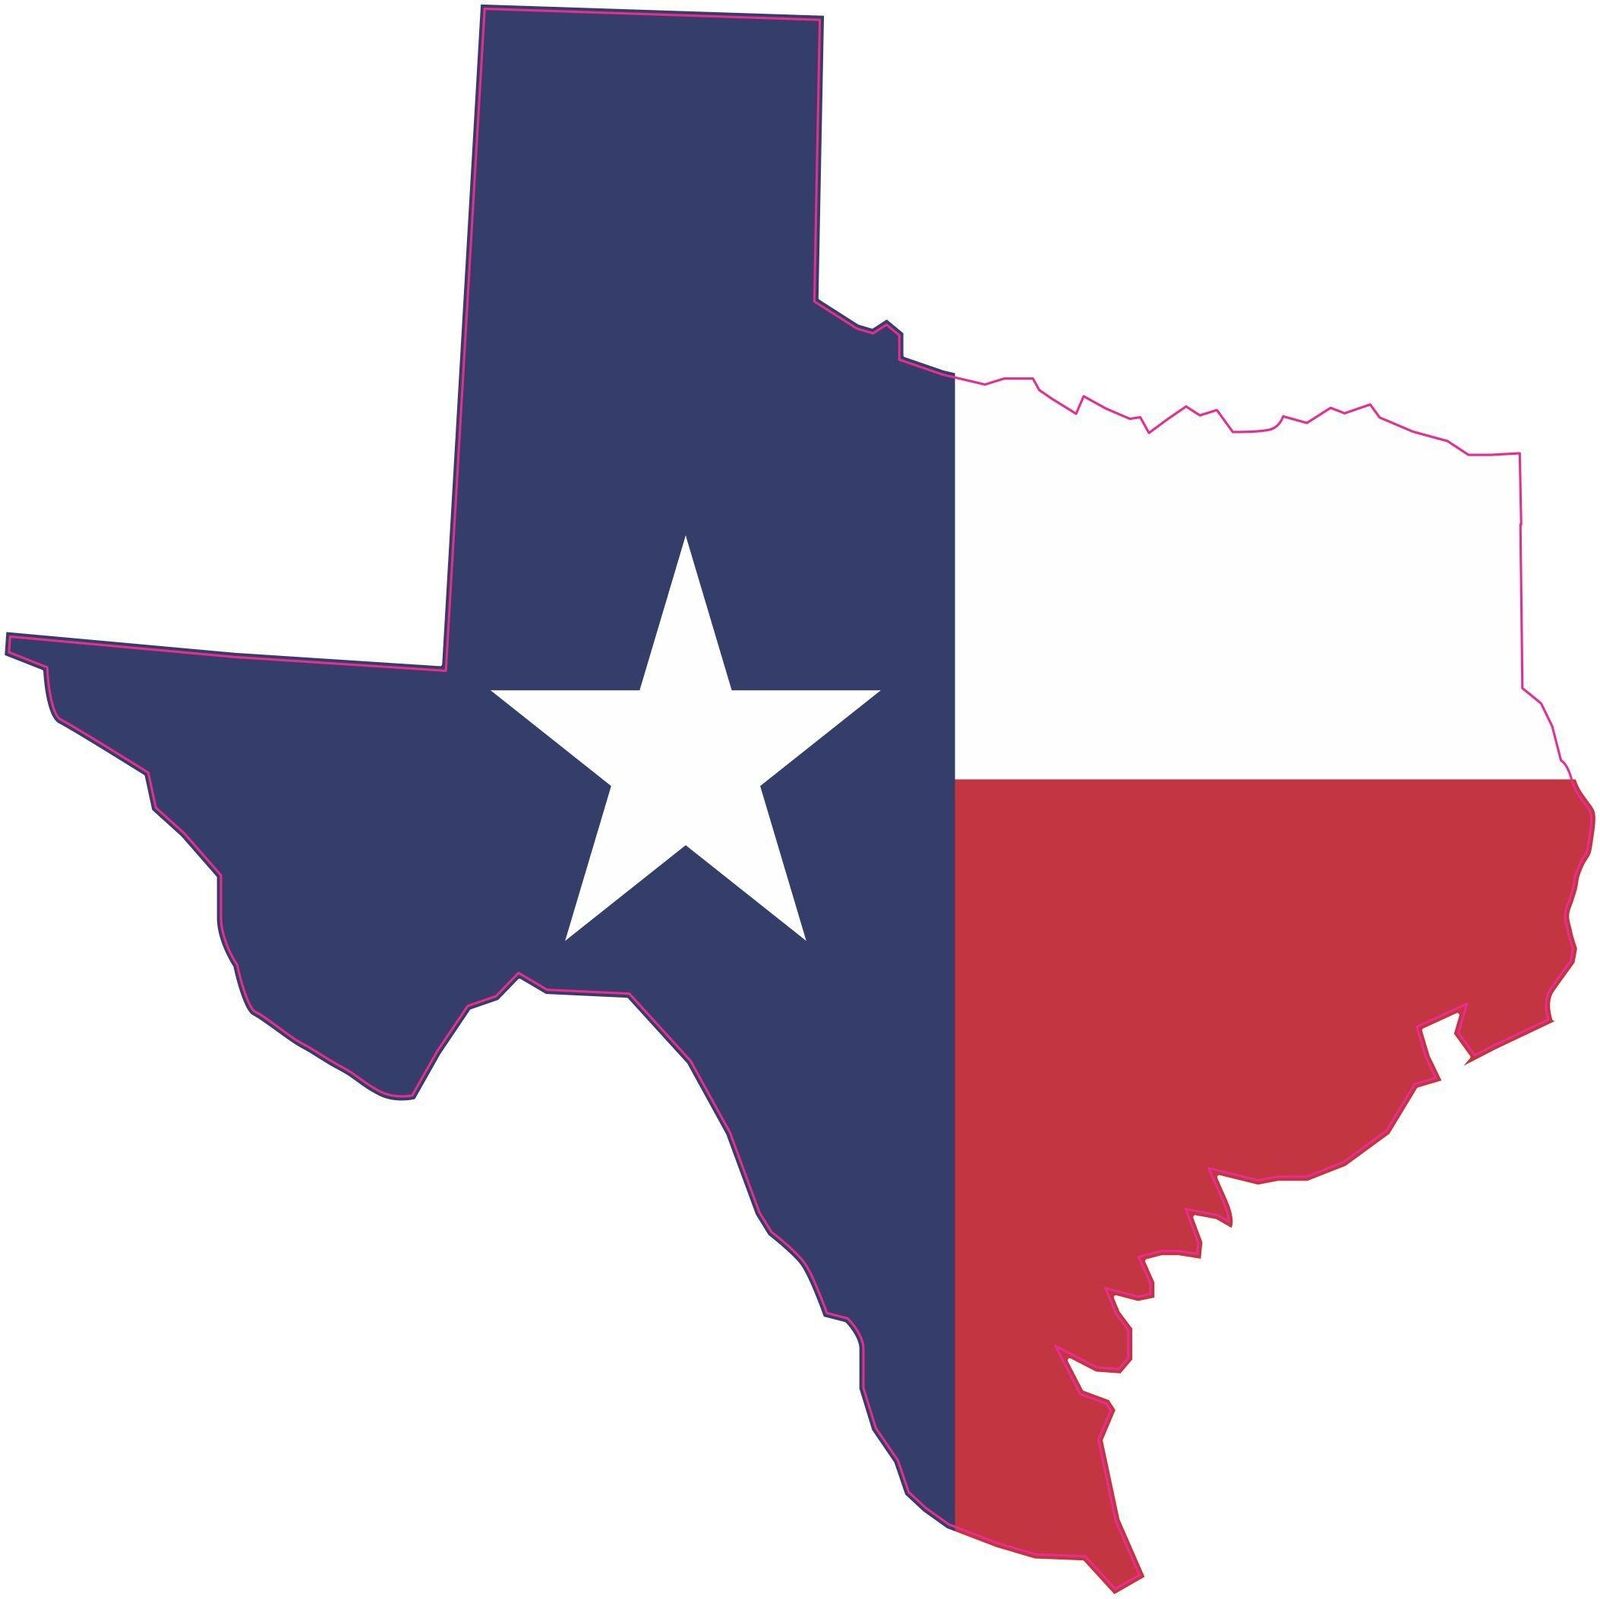 7in x 7in Die Cut Texas State Flag Bumper Sticker Vinyl Window Decal